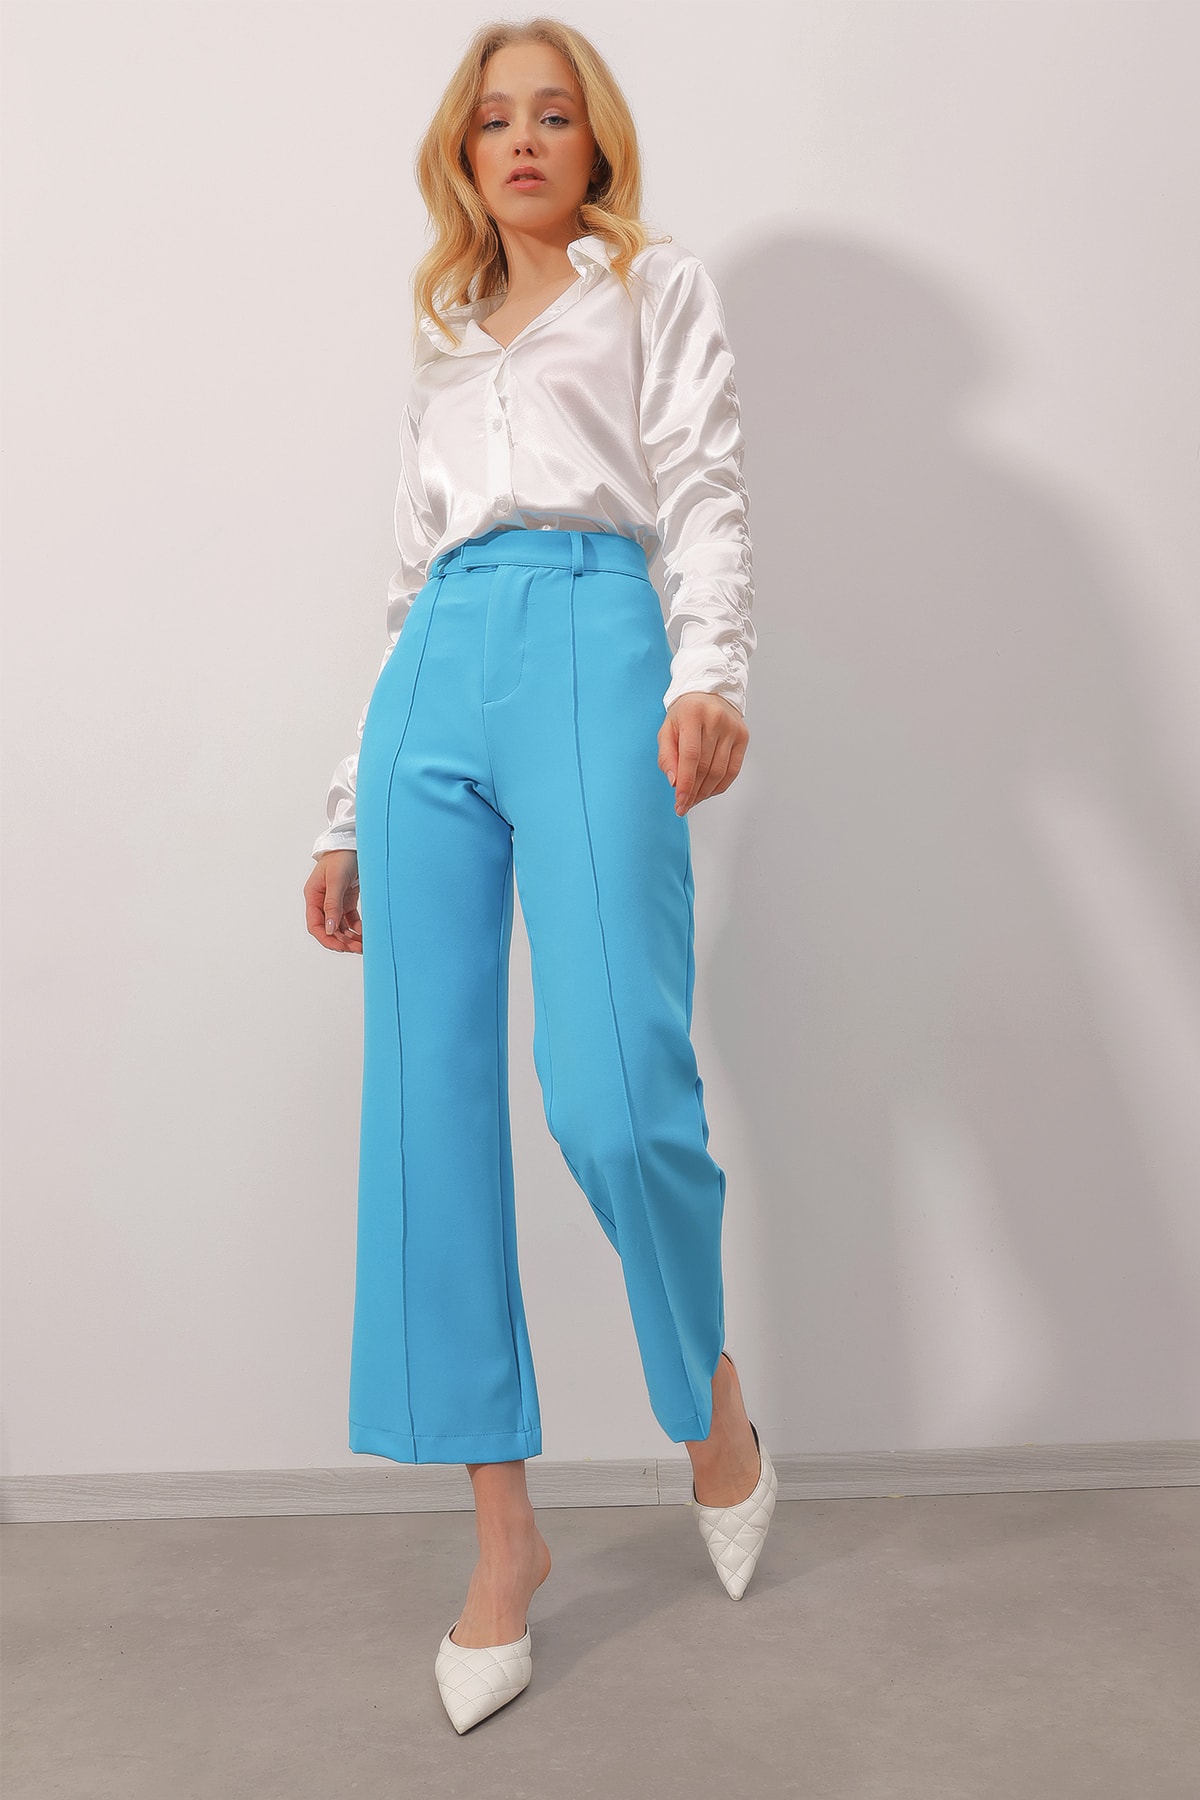 Levně Trend Alaçatı Stili Women's Turquoise Blue Stitching at the Front Woven Collar Trousers